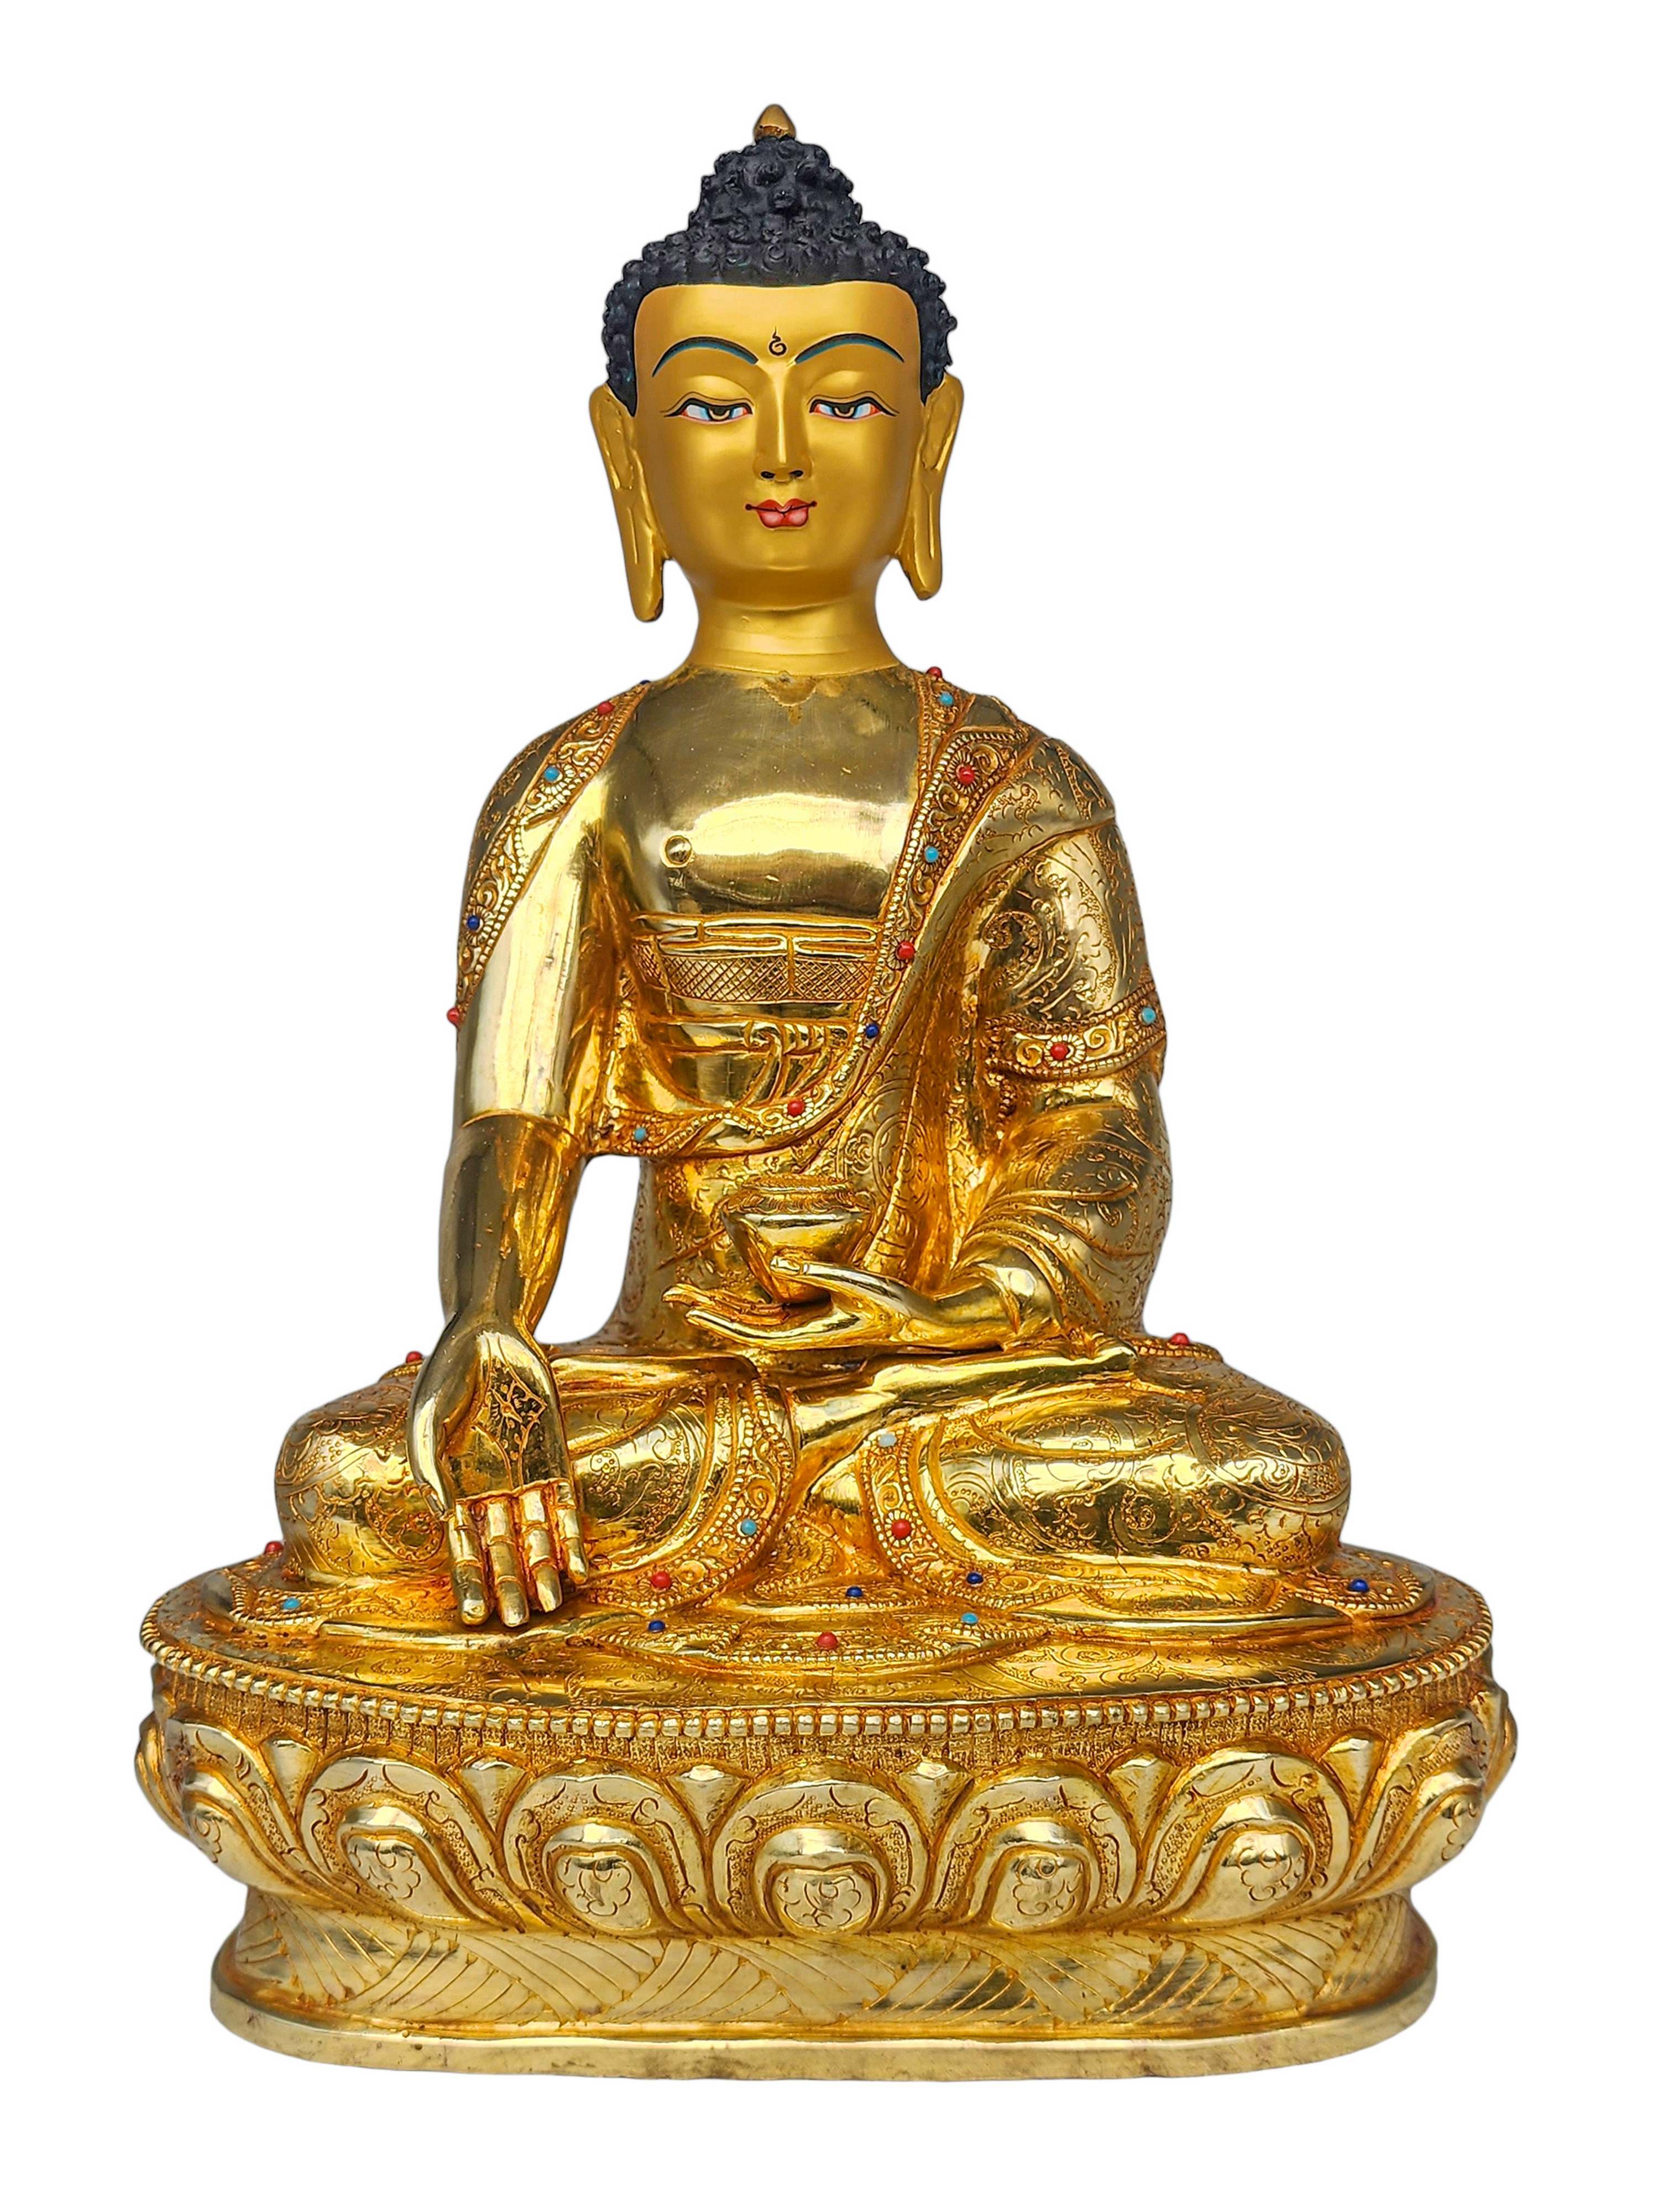 pancha Buddha Set Of Shakyamuni Buddha, Amitabha Buddha, Ratnasambhava Buddha, Vairochana Buddha, Amoghasiddi Buddha, Buddhist Handmade Statue, full Gold Plated, Face Painted And stone Setting